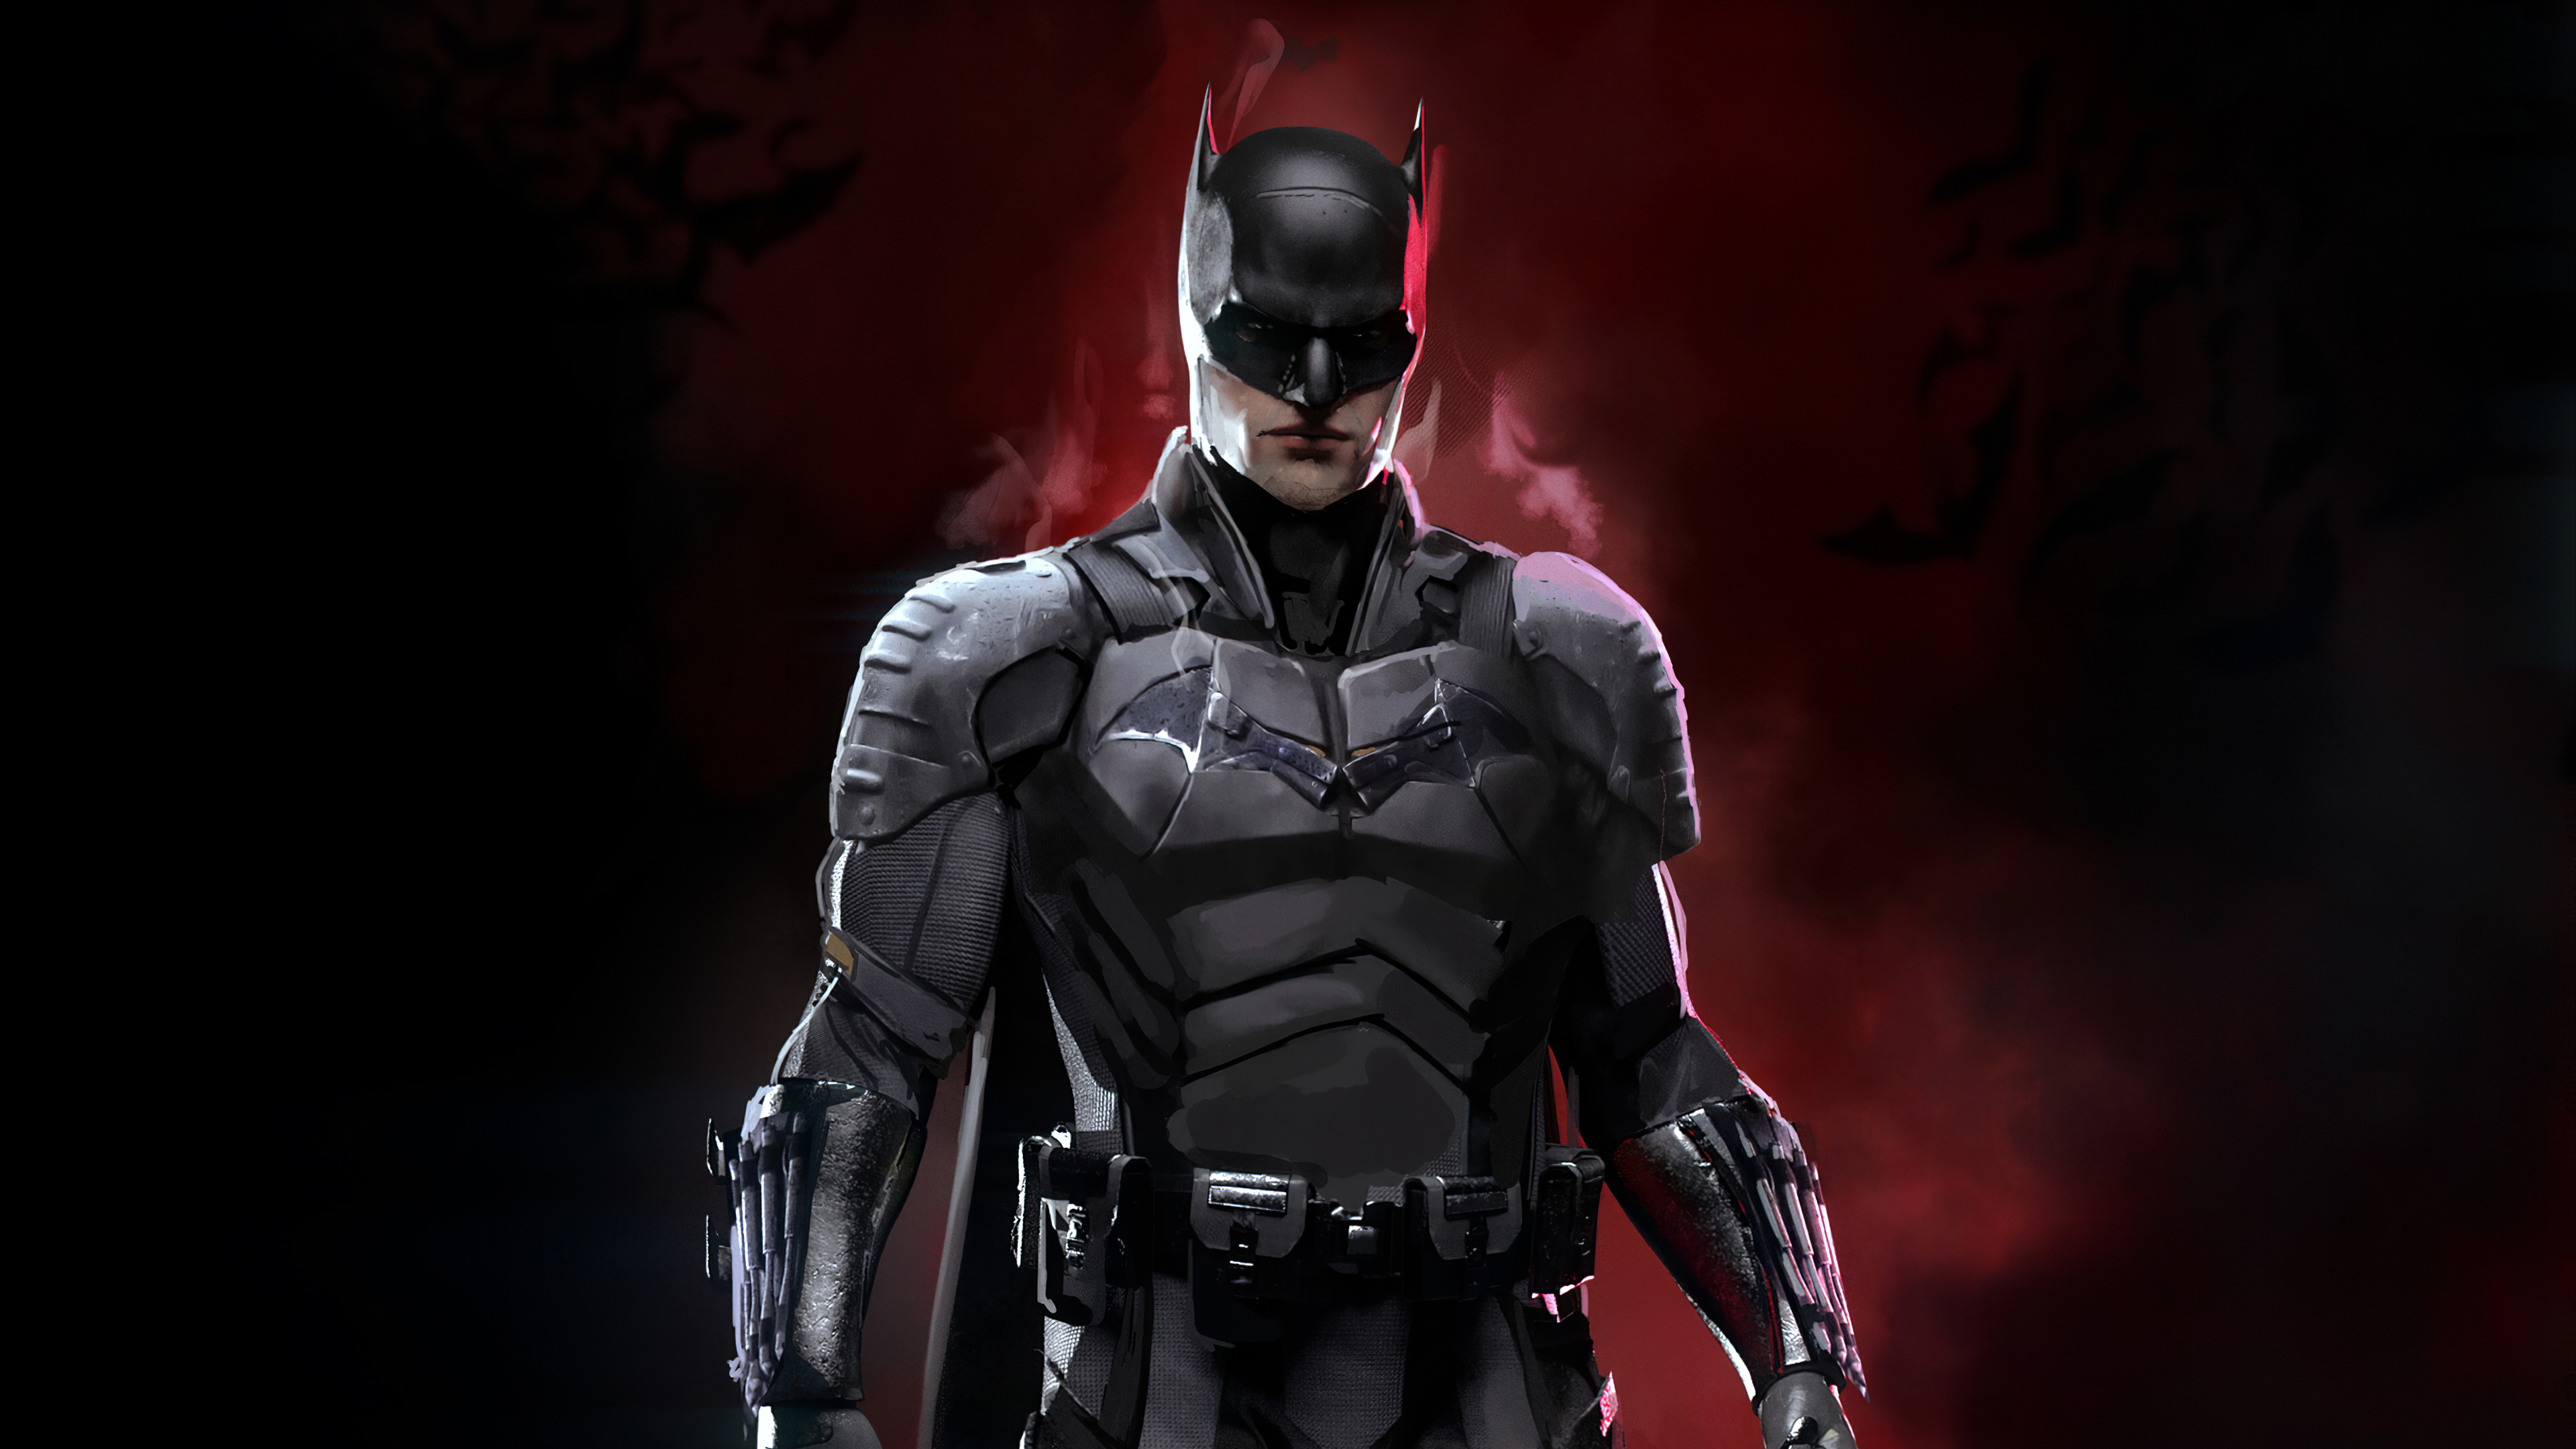 The Batman 4k Ultra HD Wallpaper